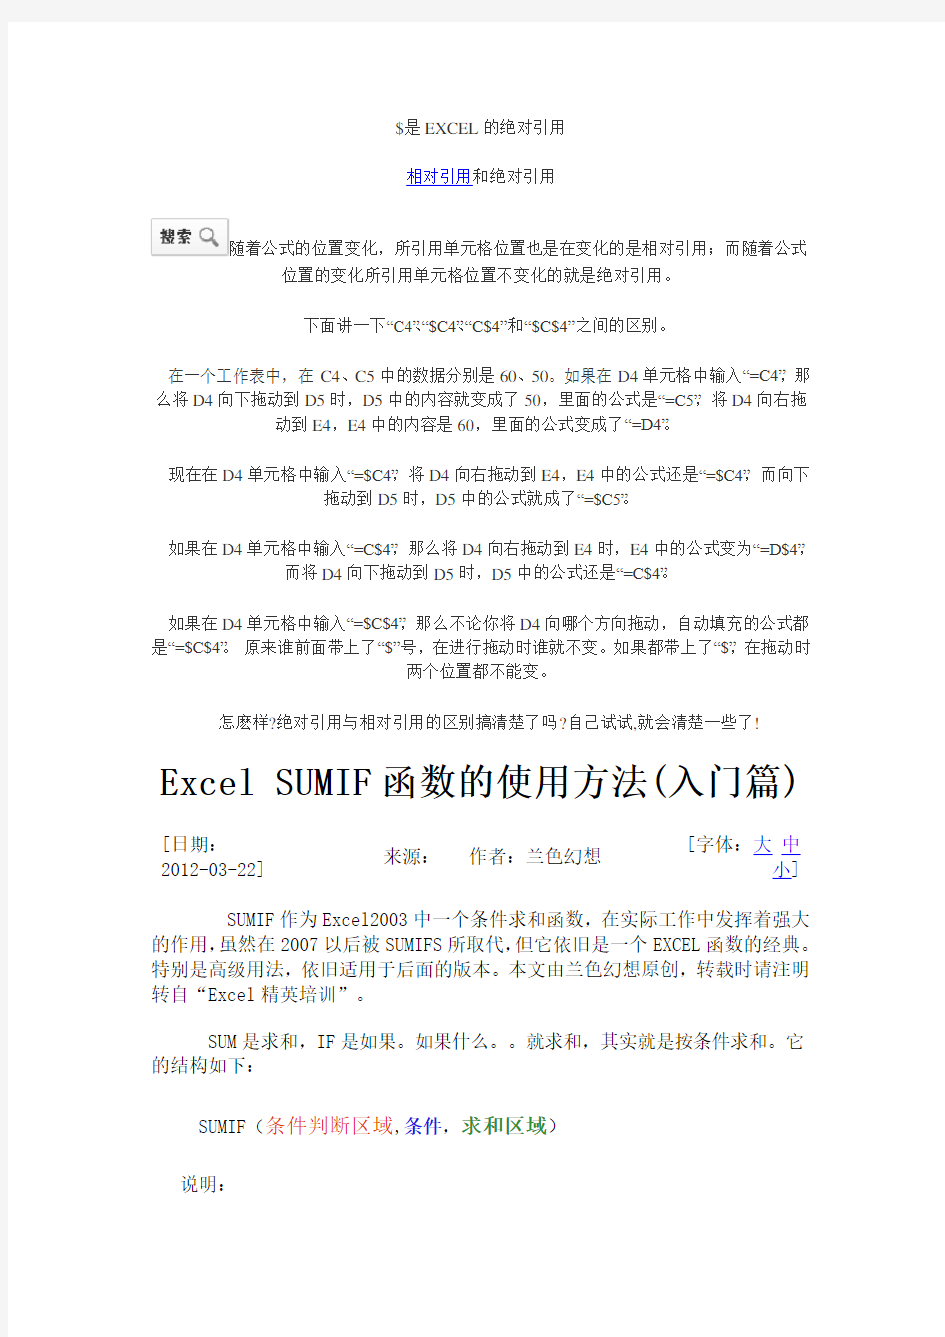 Excel_SUMIF函数的使用方法